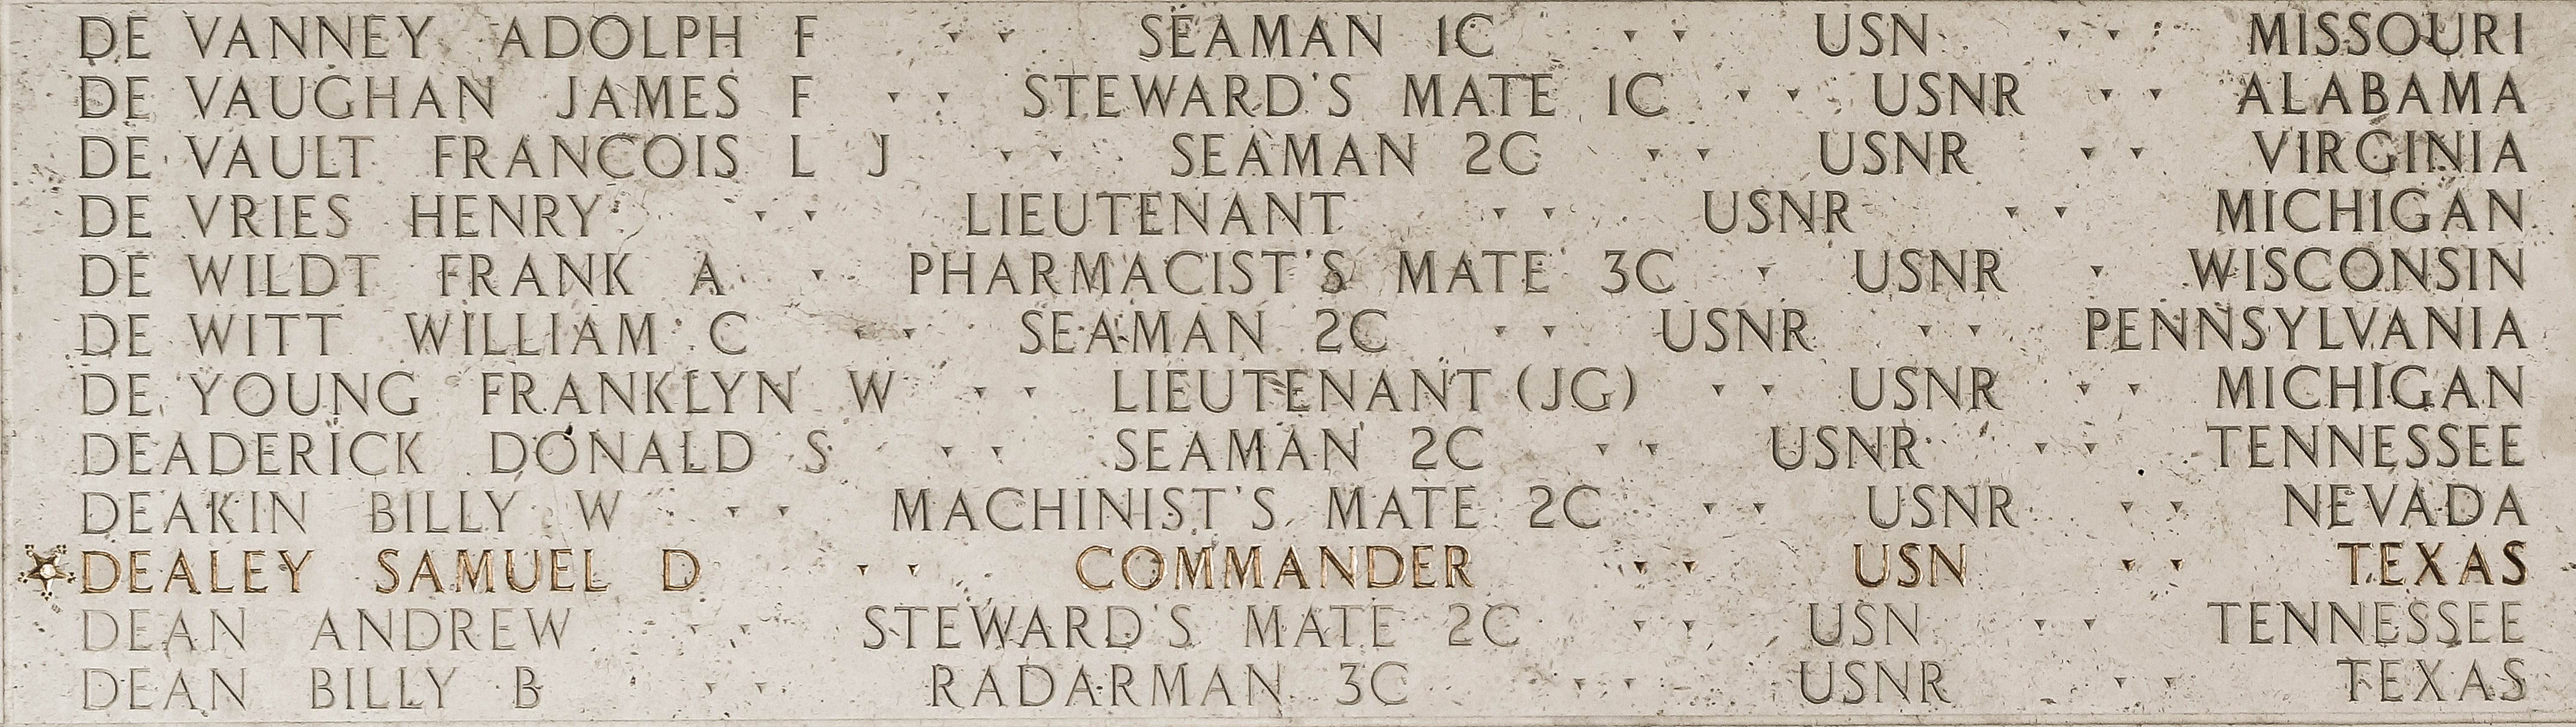 Francois L. J. De Vault, Seaman Second Class